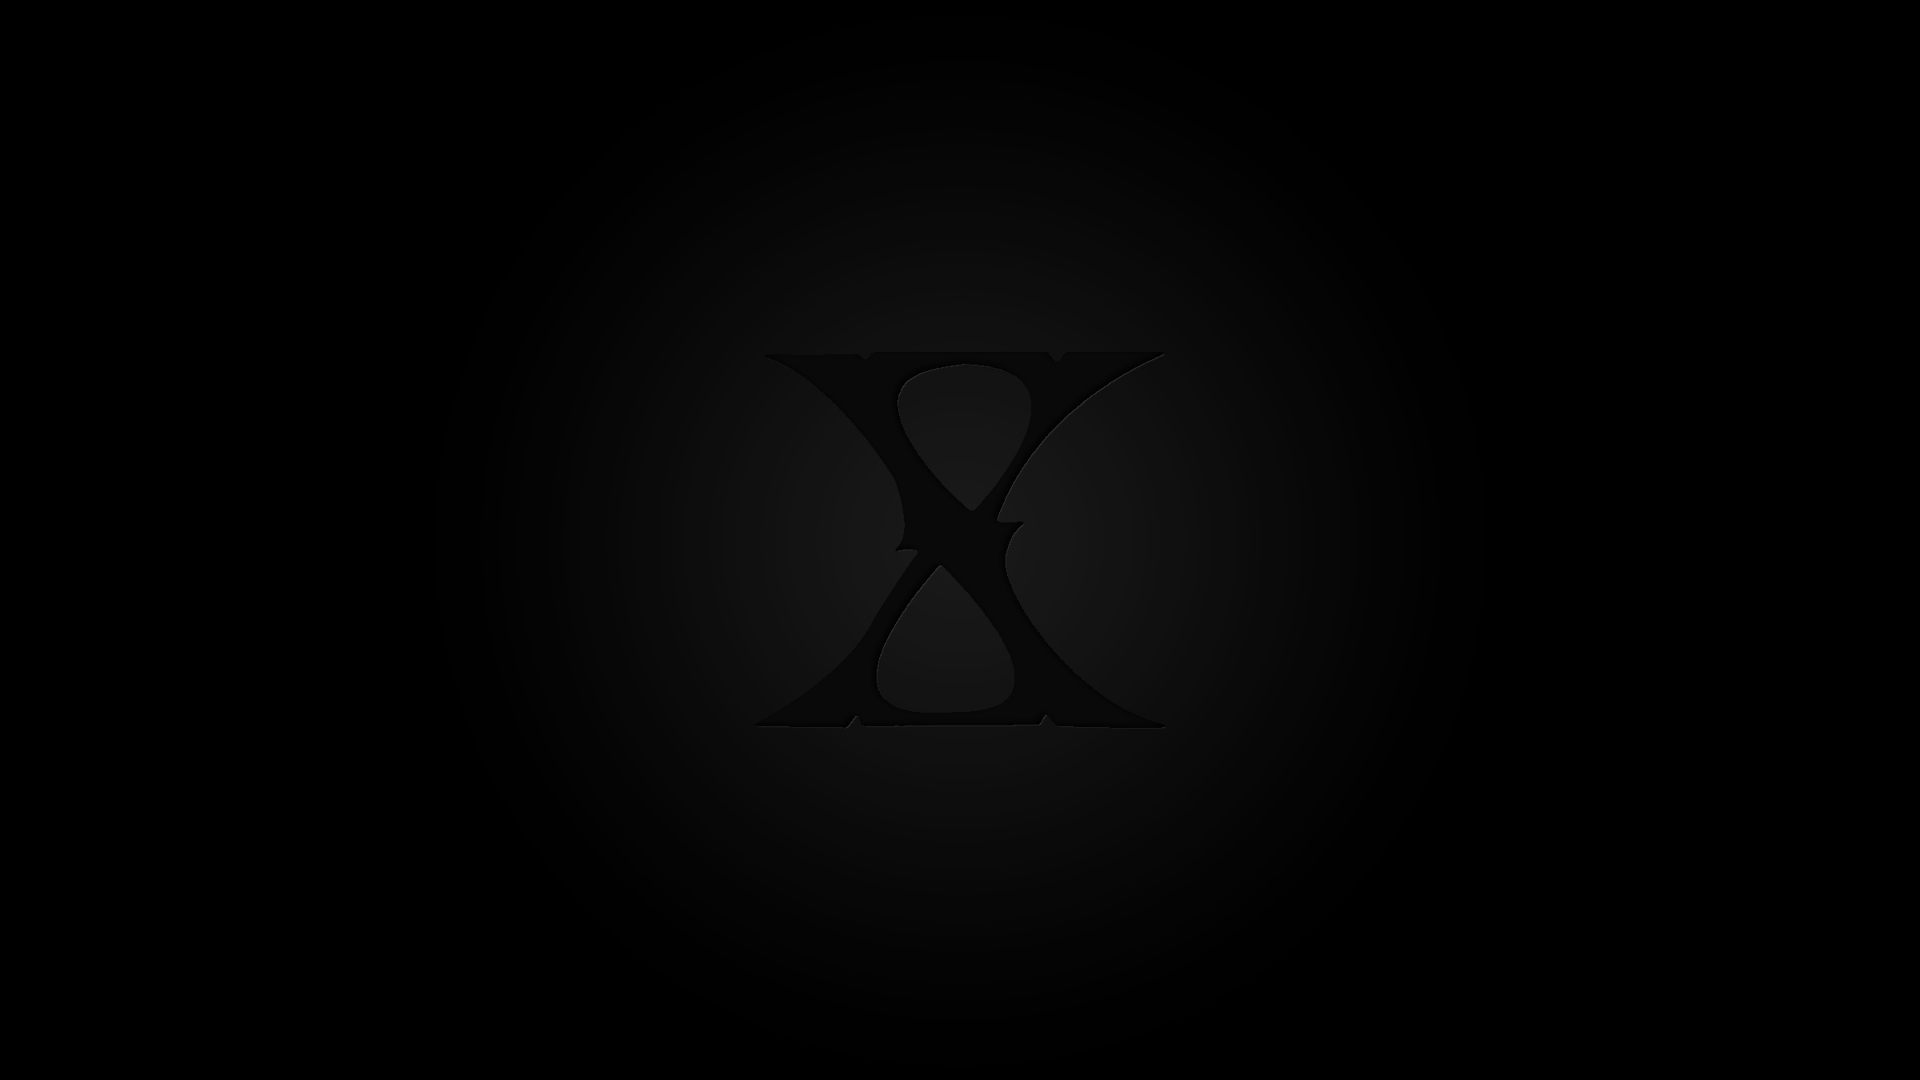 General 1920x1080 X Japan dark black letter simple background black background